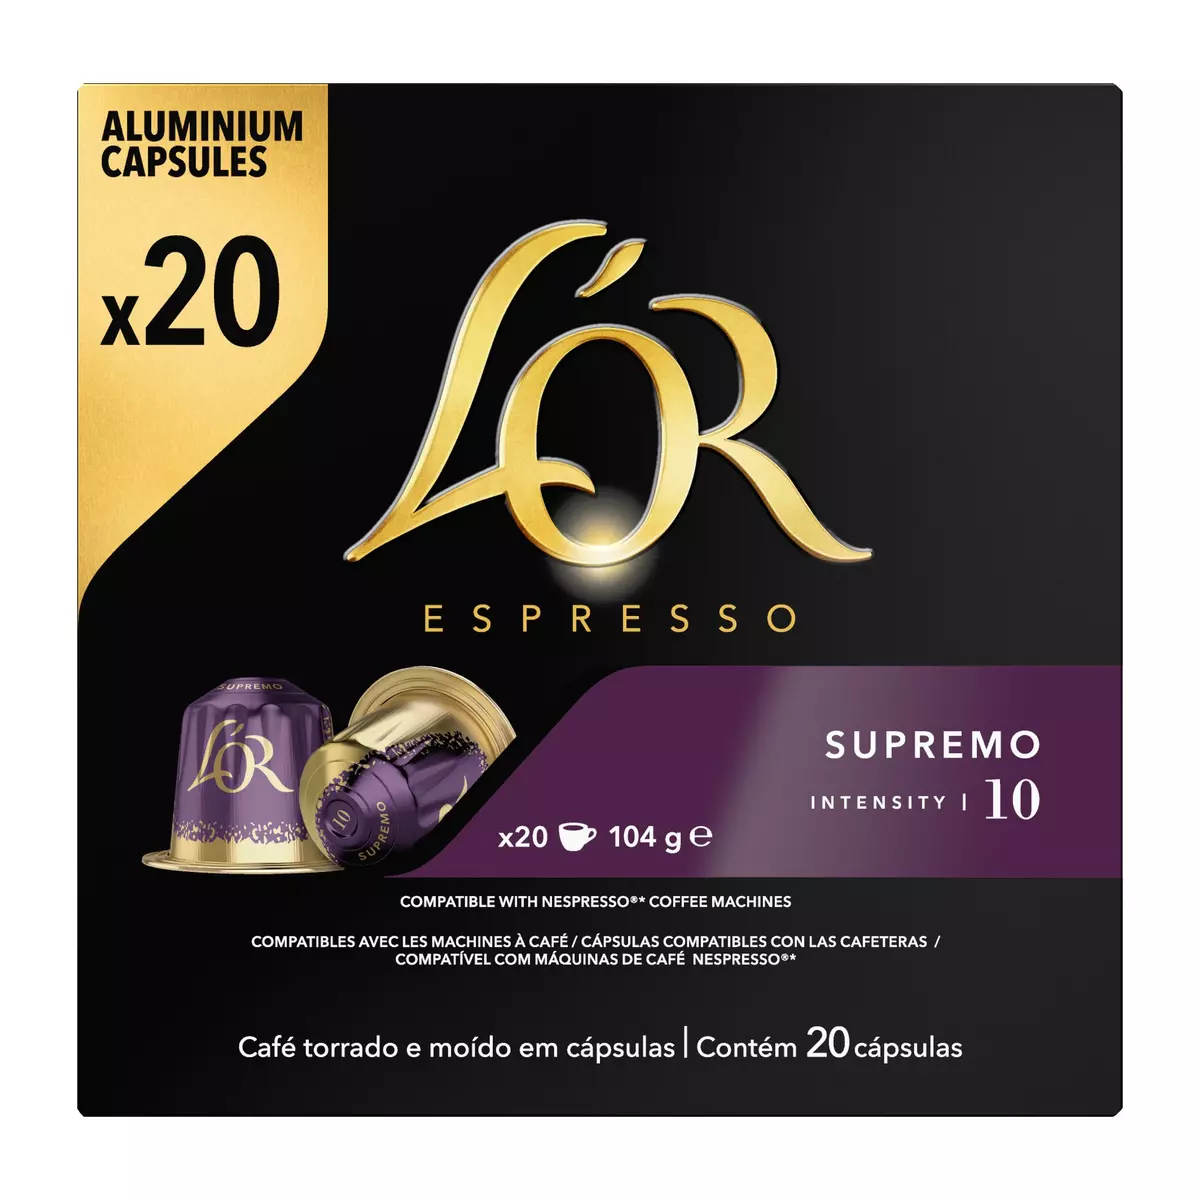 L'OR ESPRESSO Capsules de café supremo intensité 10 compatibles Nespresso 20 capsules 104g